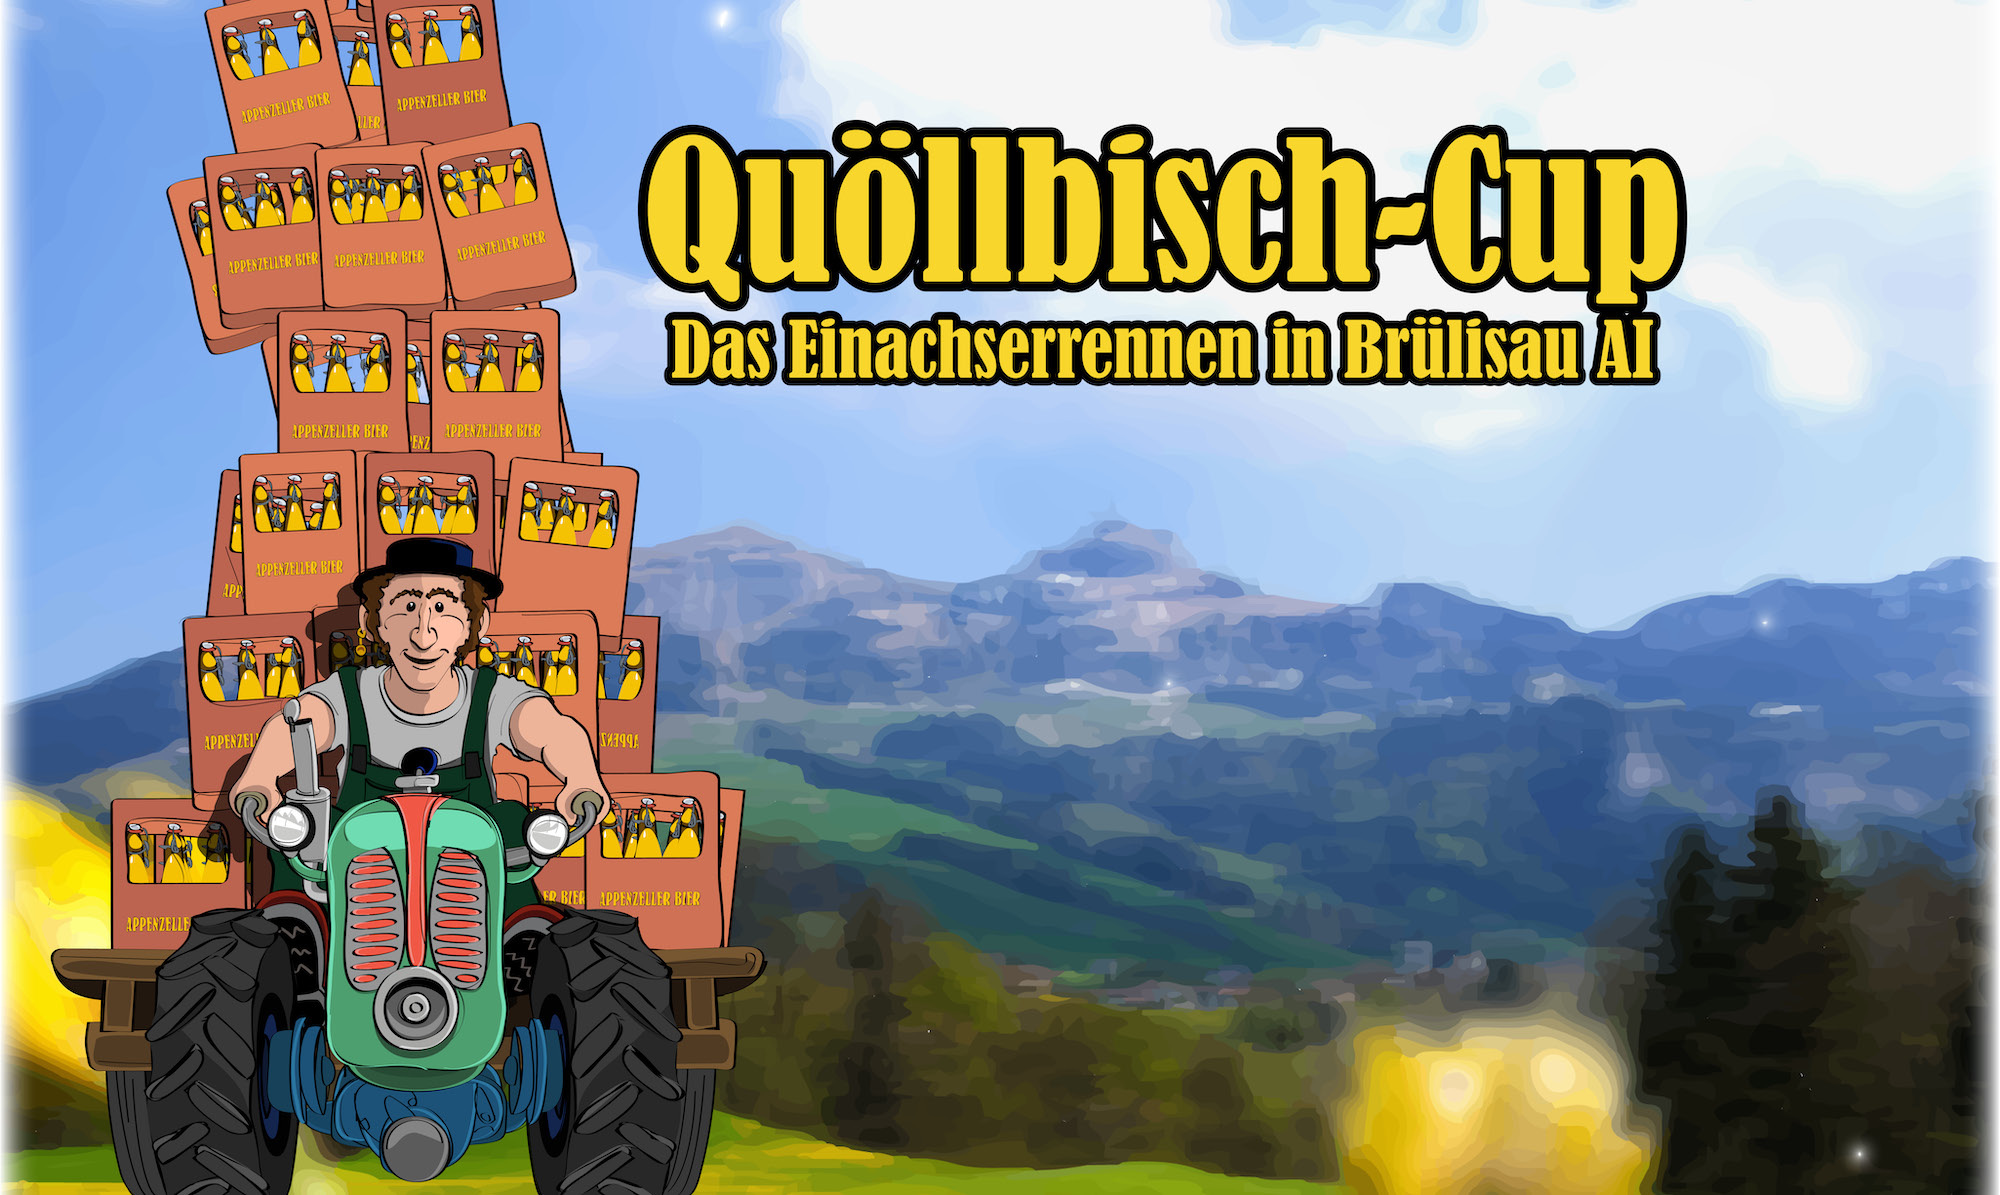 (c) Quoellbisch-cup.ch